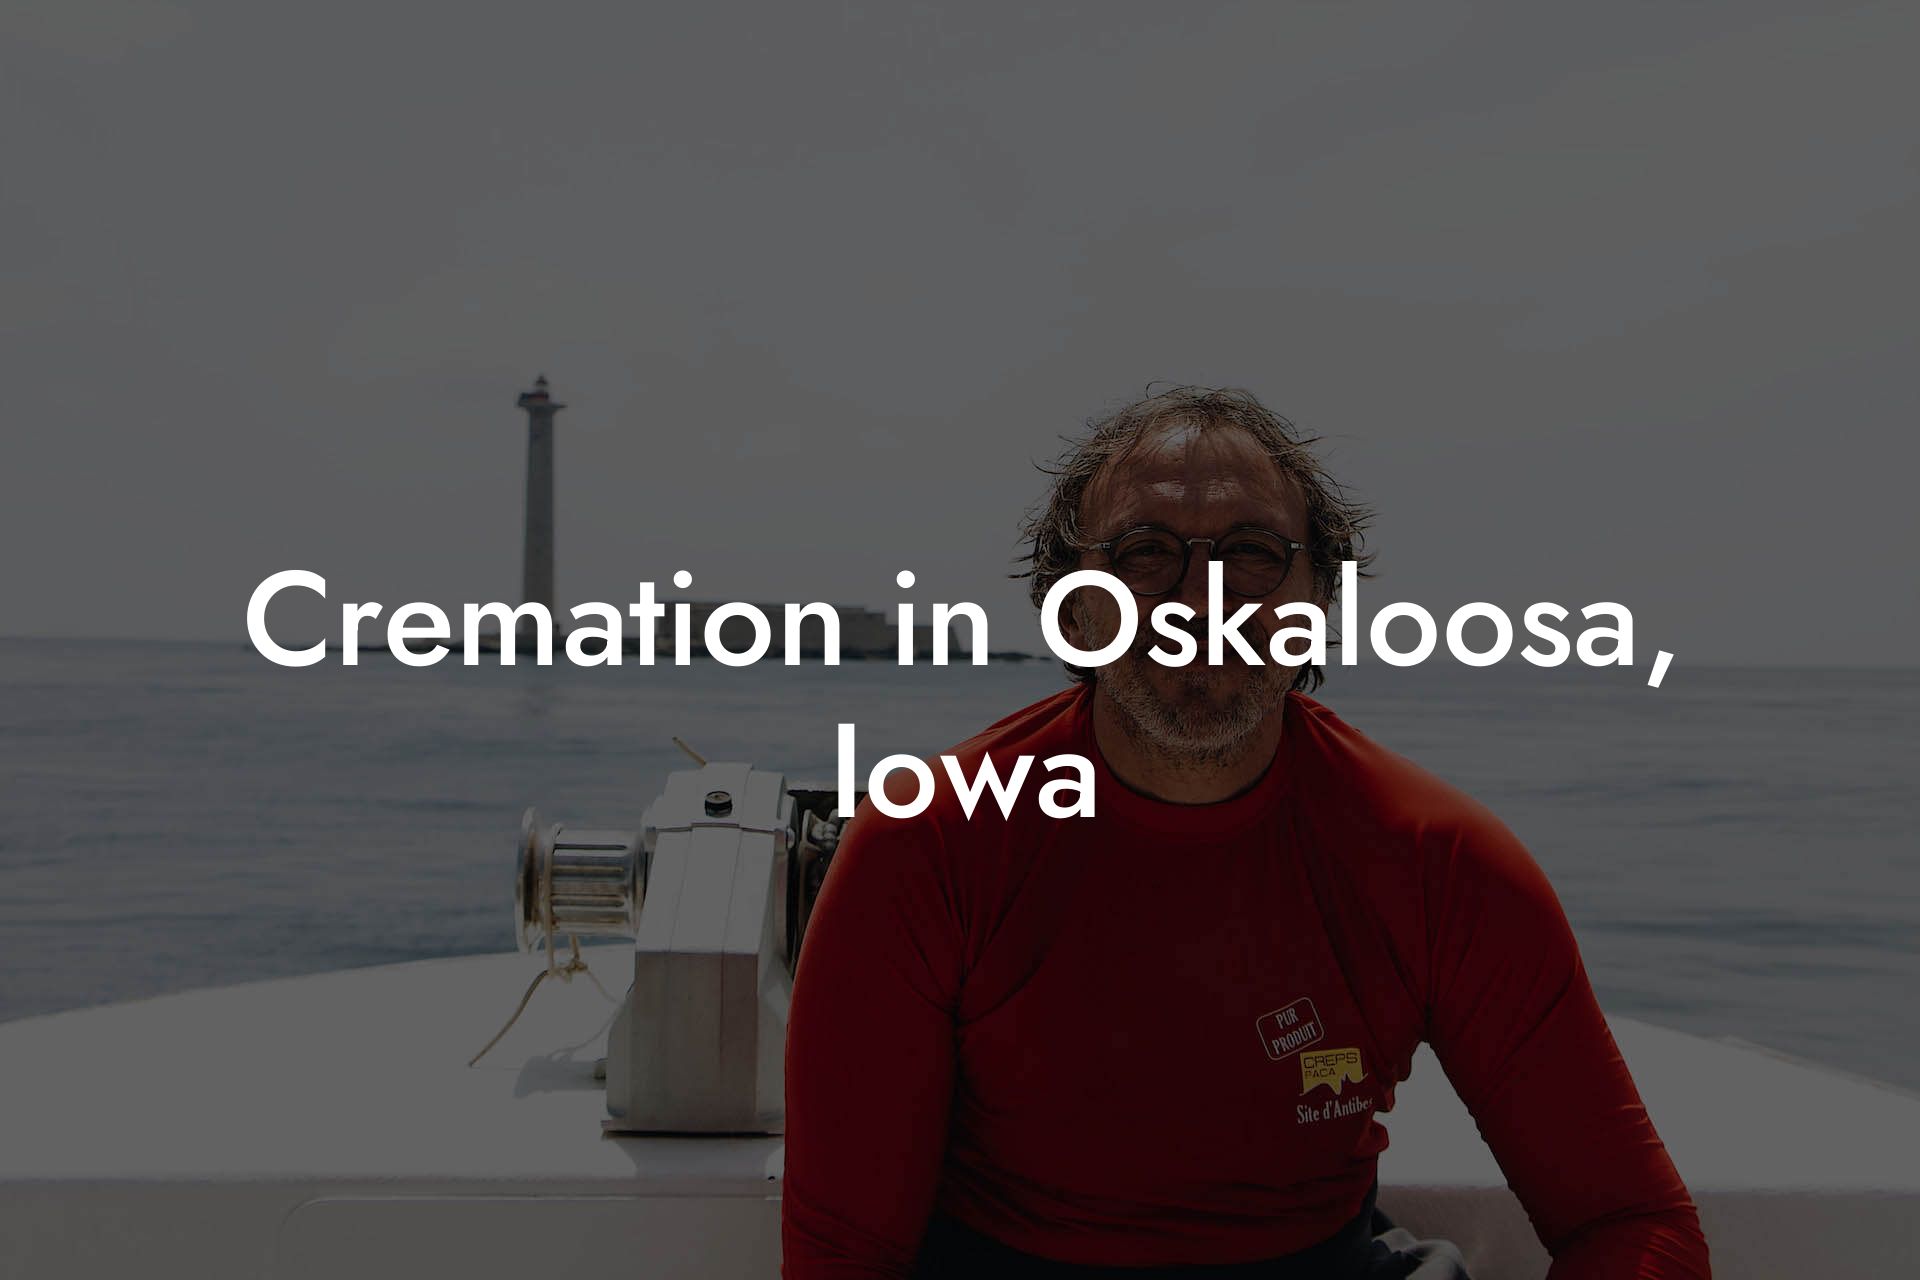 Cremation in Oskaloosa, Iowa